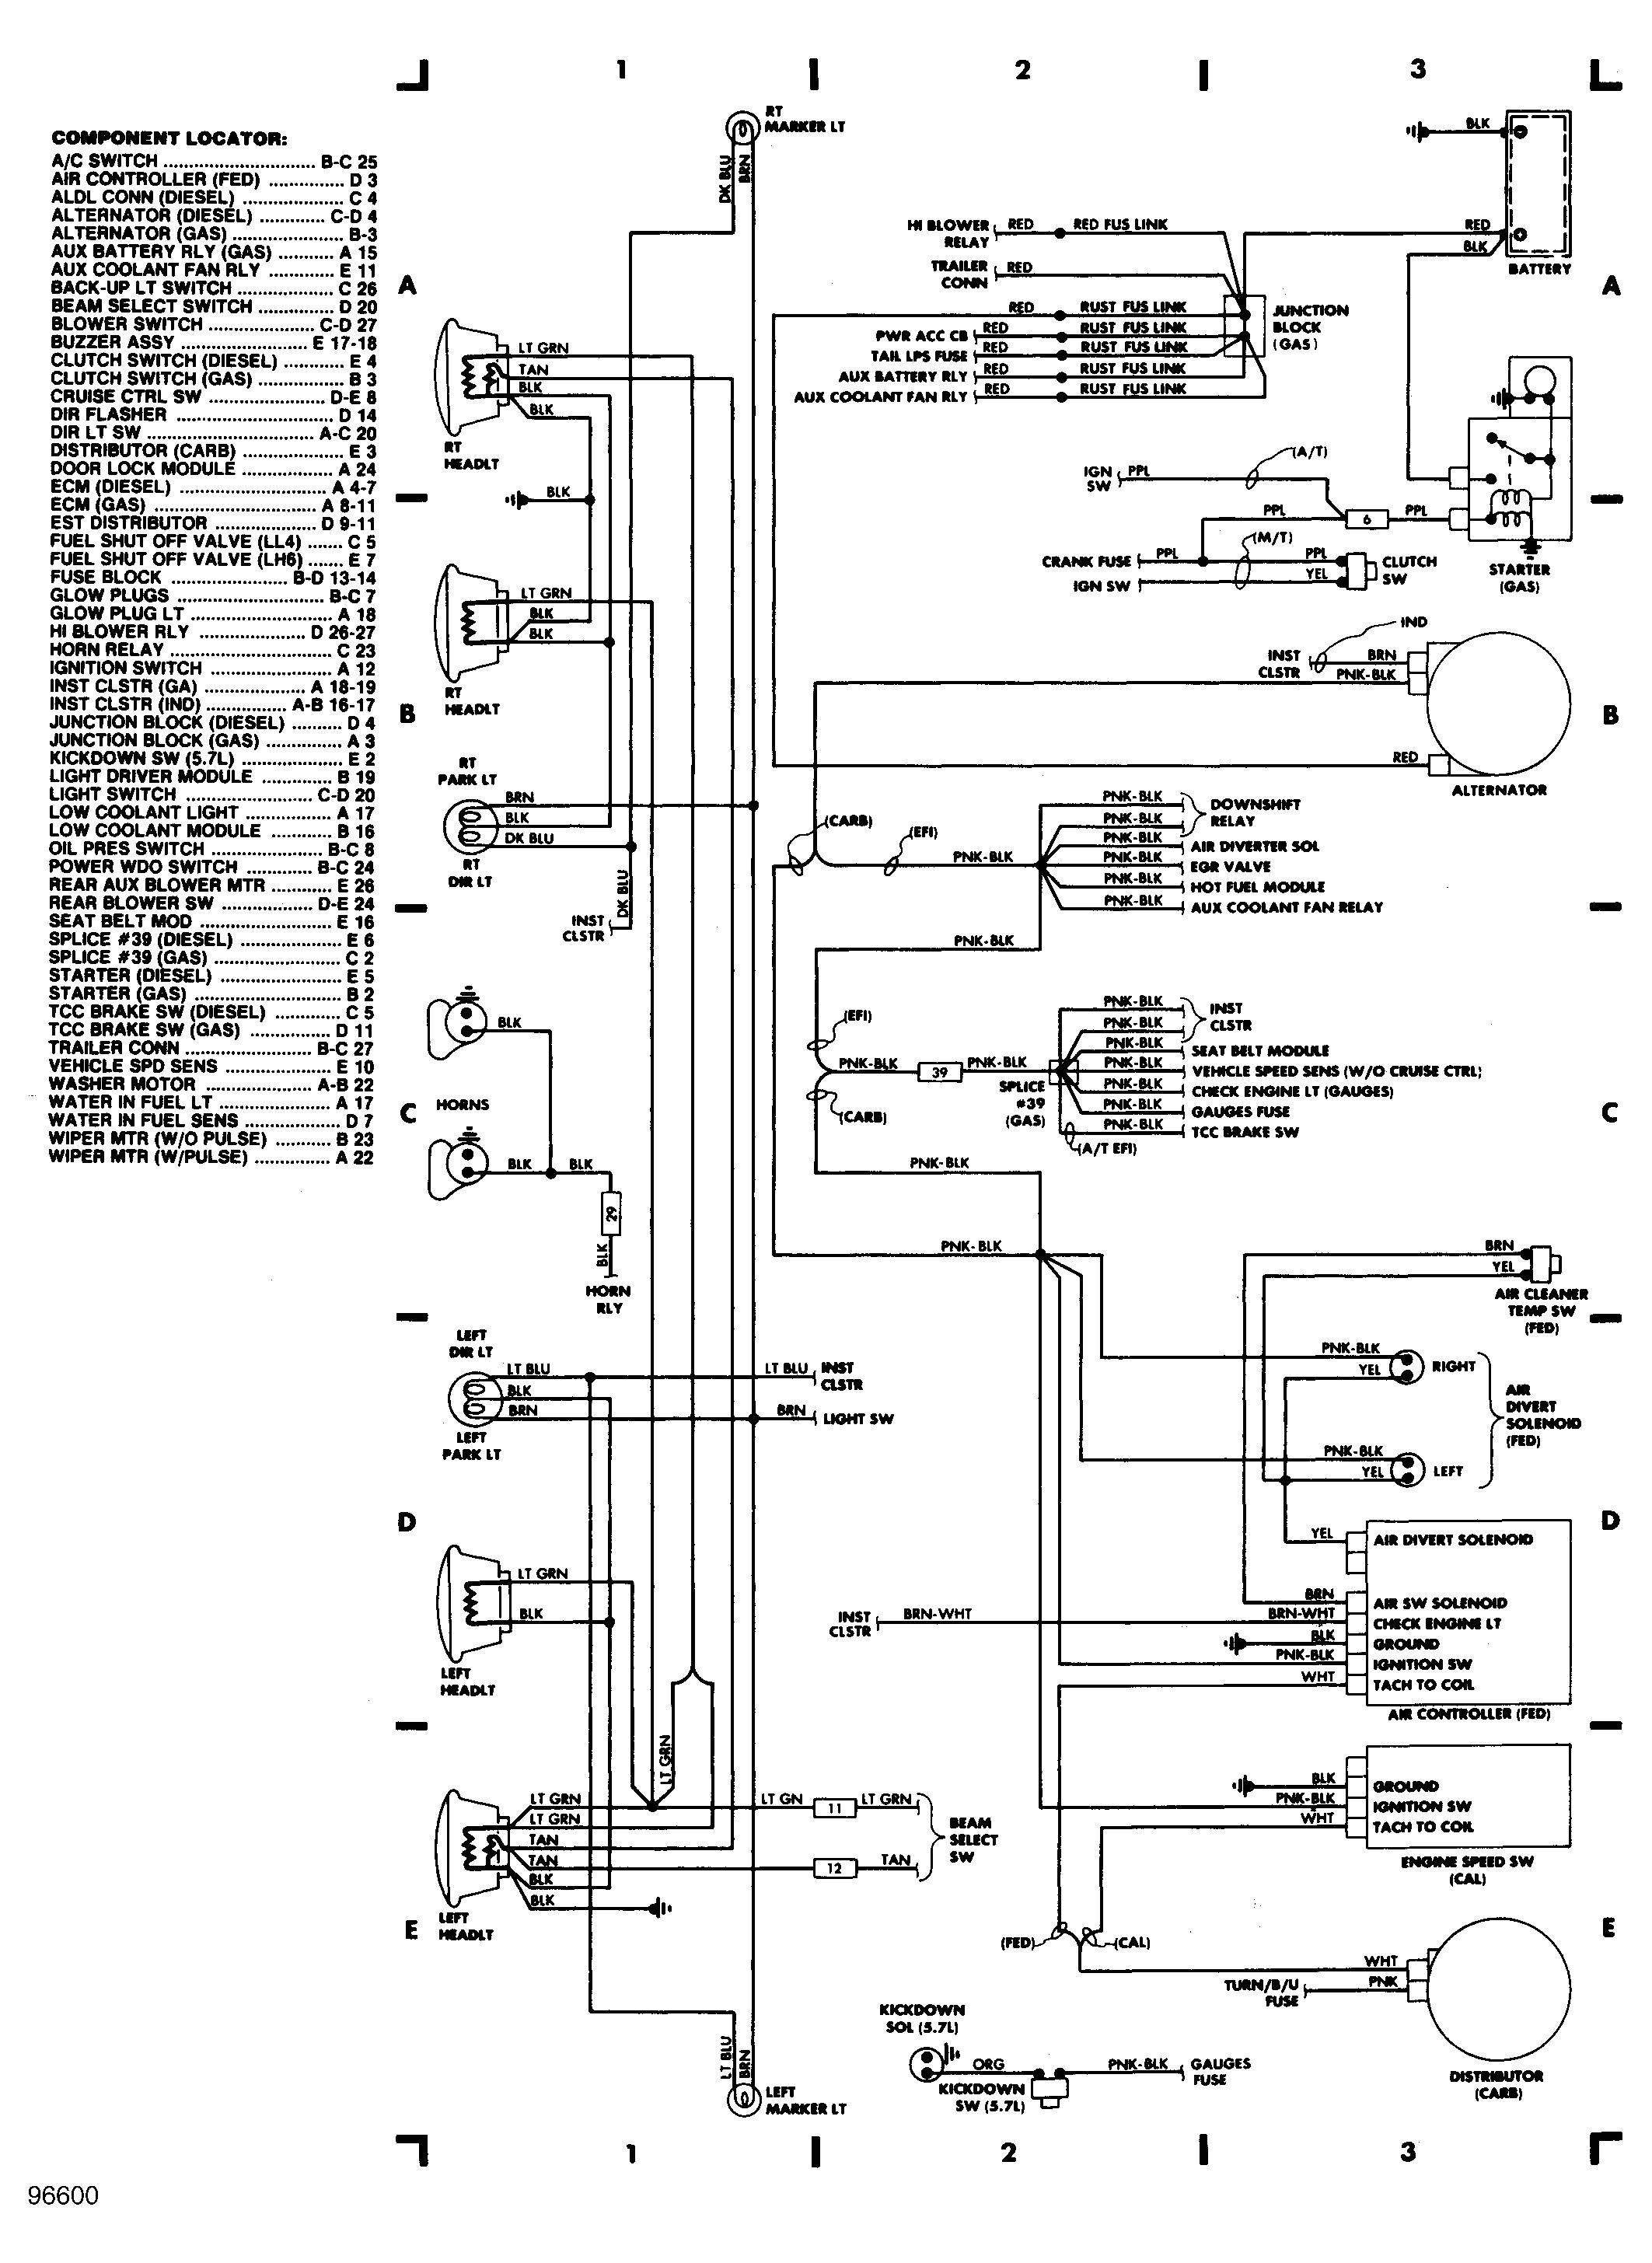 m1009 cucv wiring diagram detailed schematics diagram rh keyplusrubber com 2002 ford focus power distribution diagrams